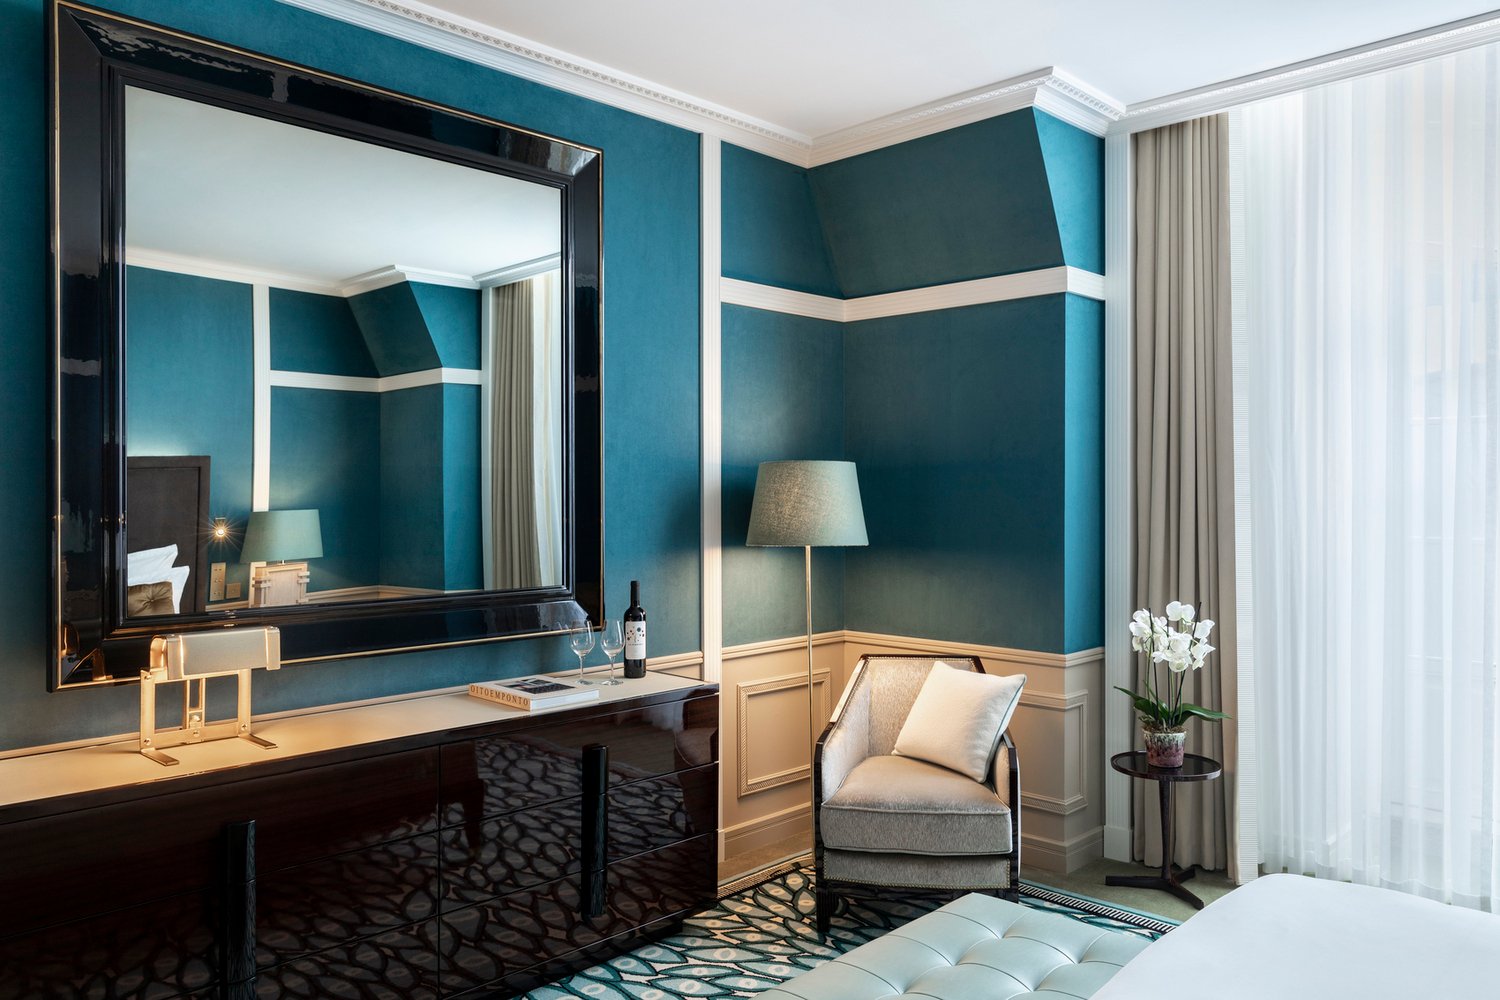 Design boutique hotel Porto Portugal Maison Albar Le Monumental Palace 5 stars room suite